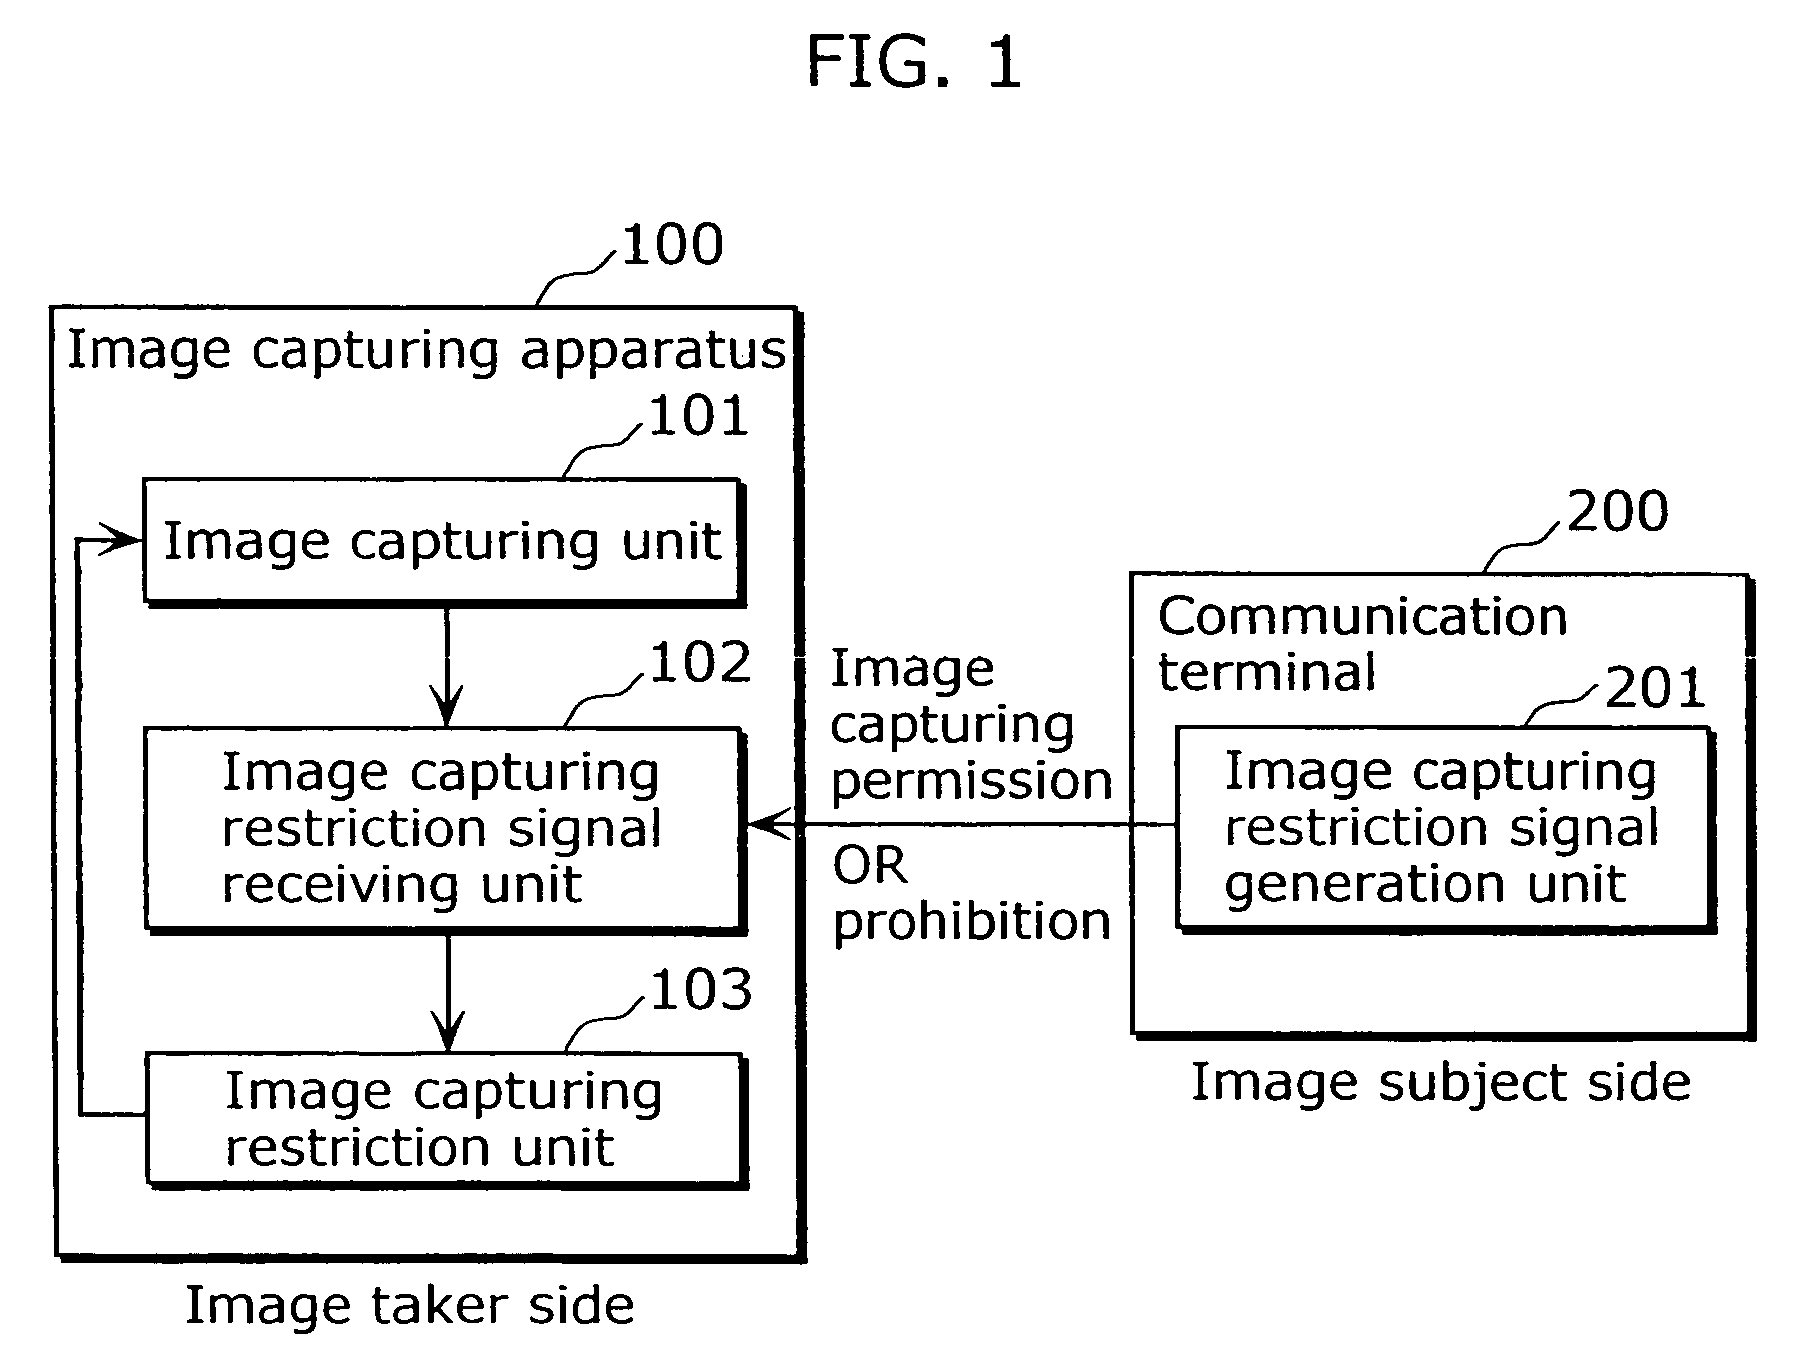 Image capturing system having an image capturing restriction function